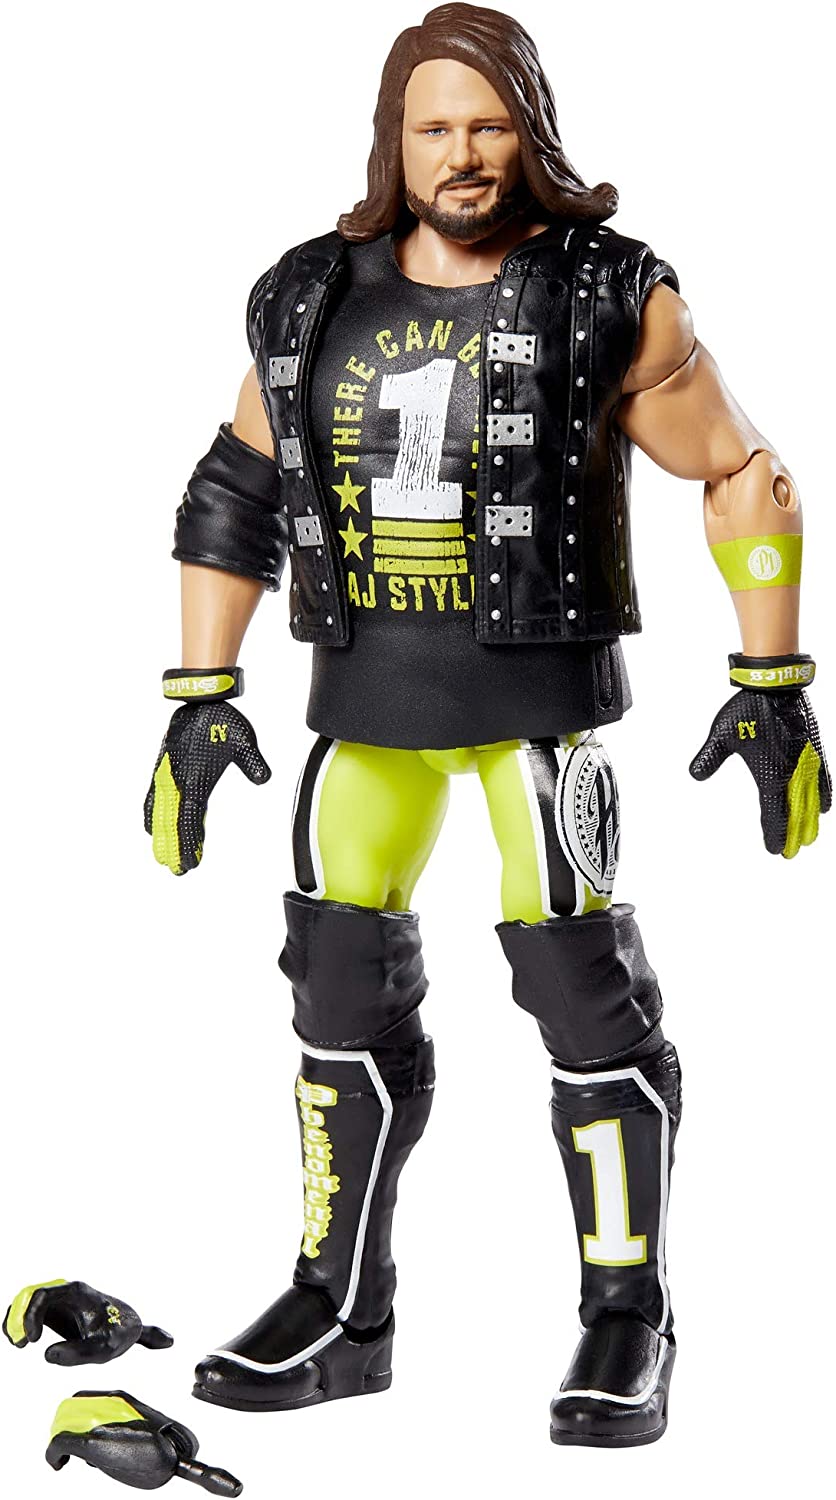 2020 WWE Mattel Elite Collection Series 74 AJ Styles